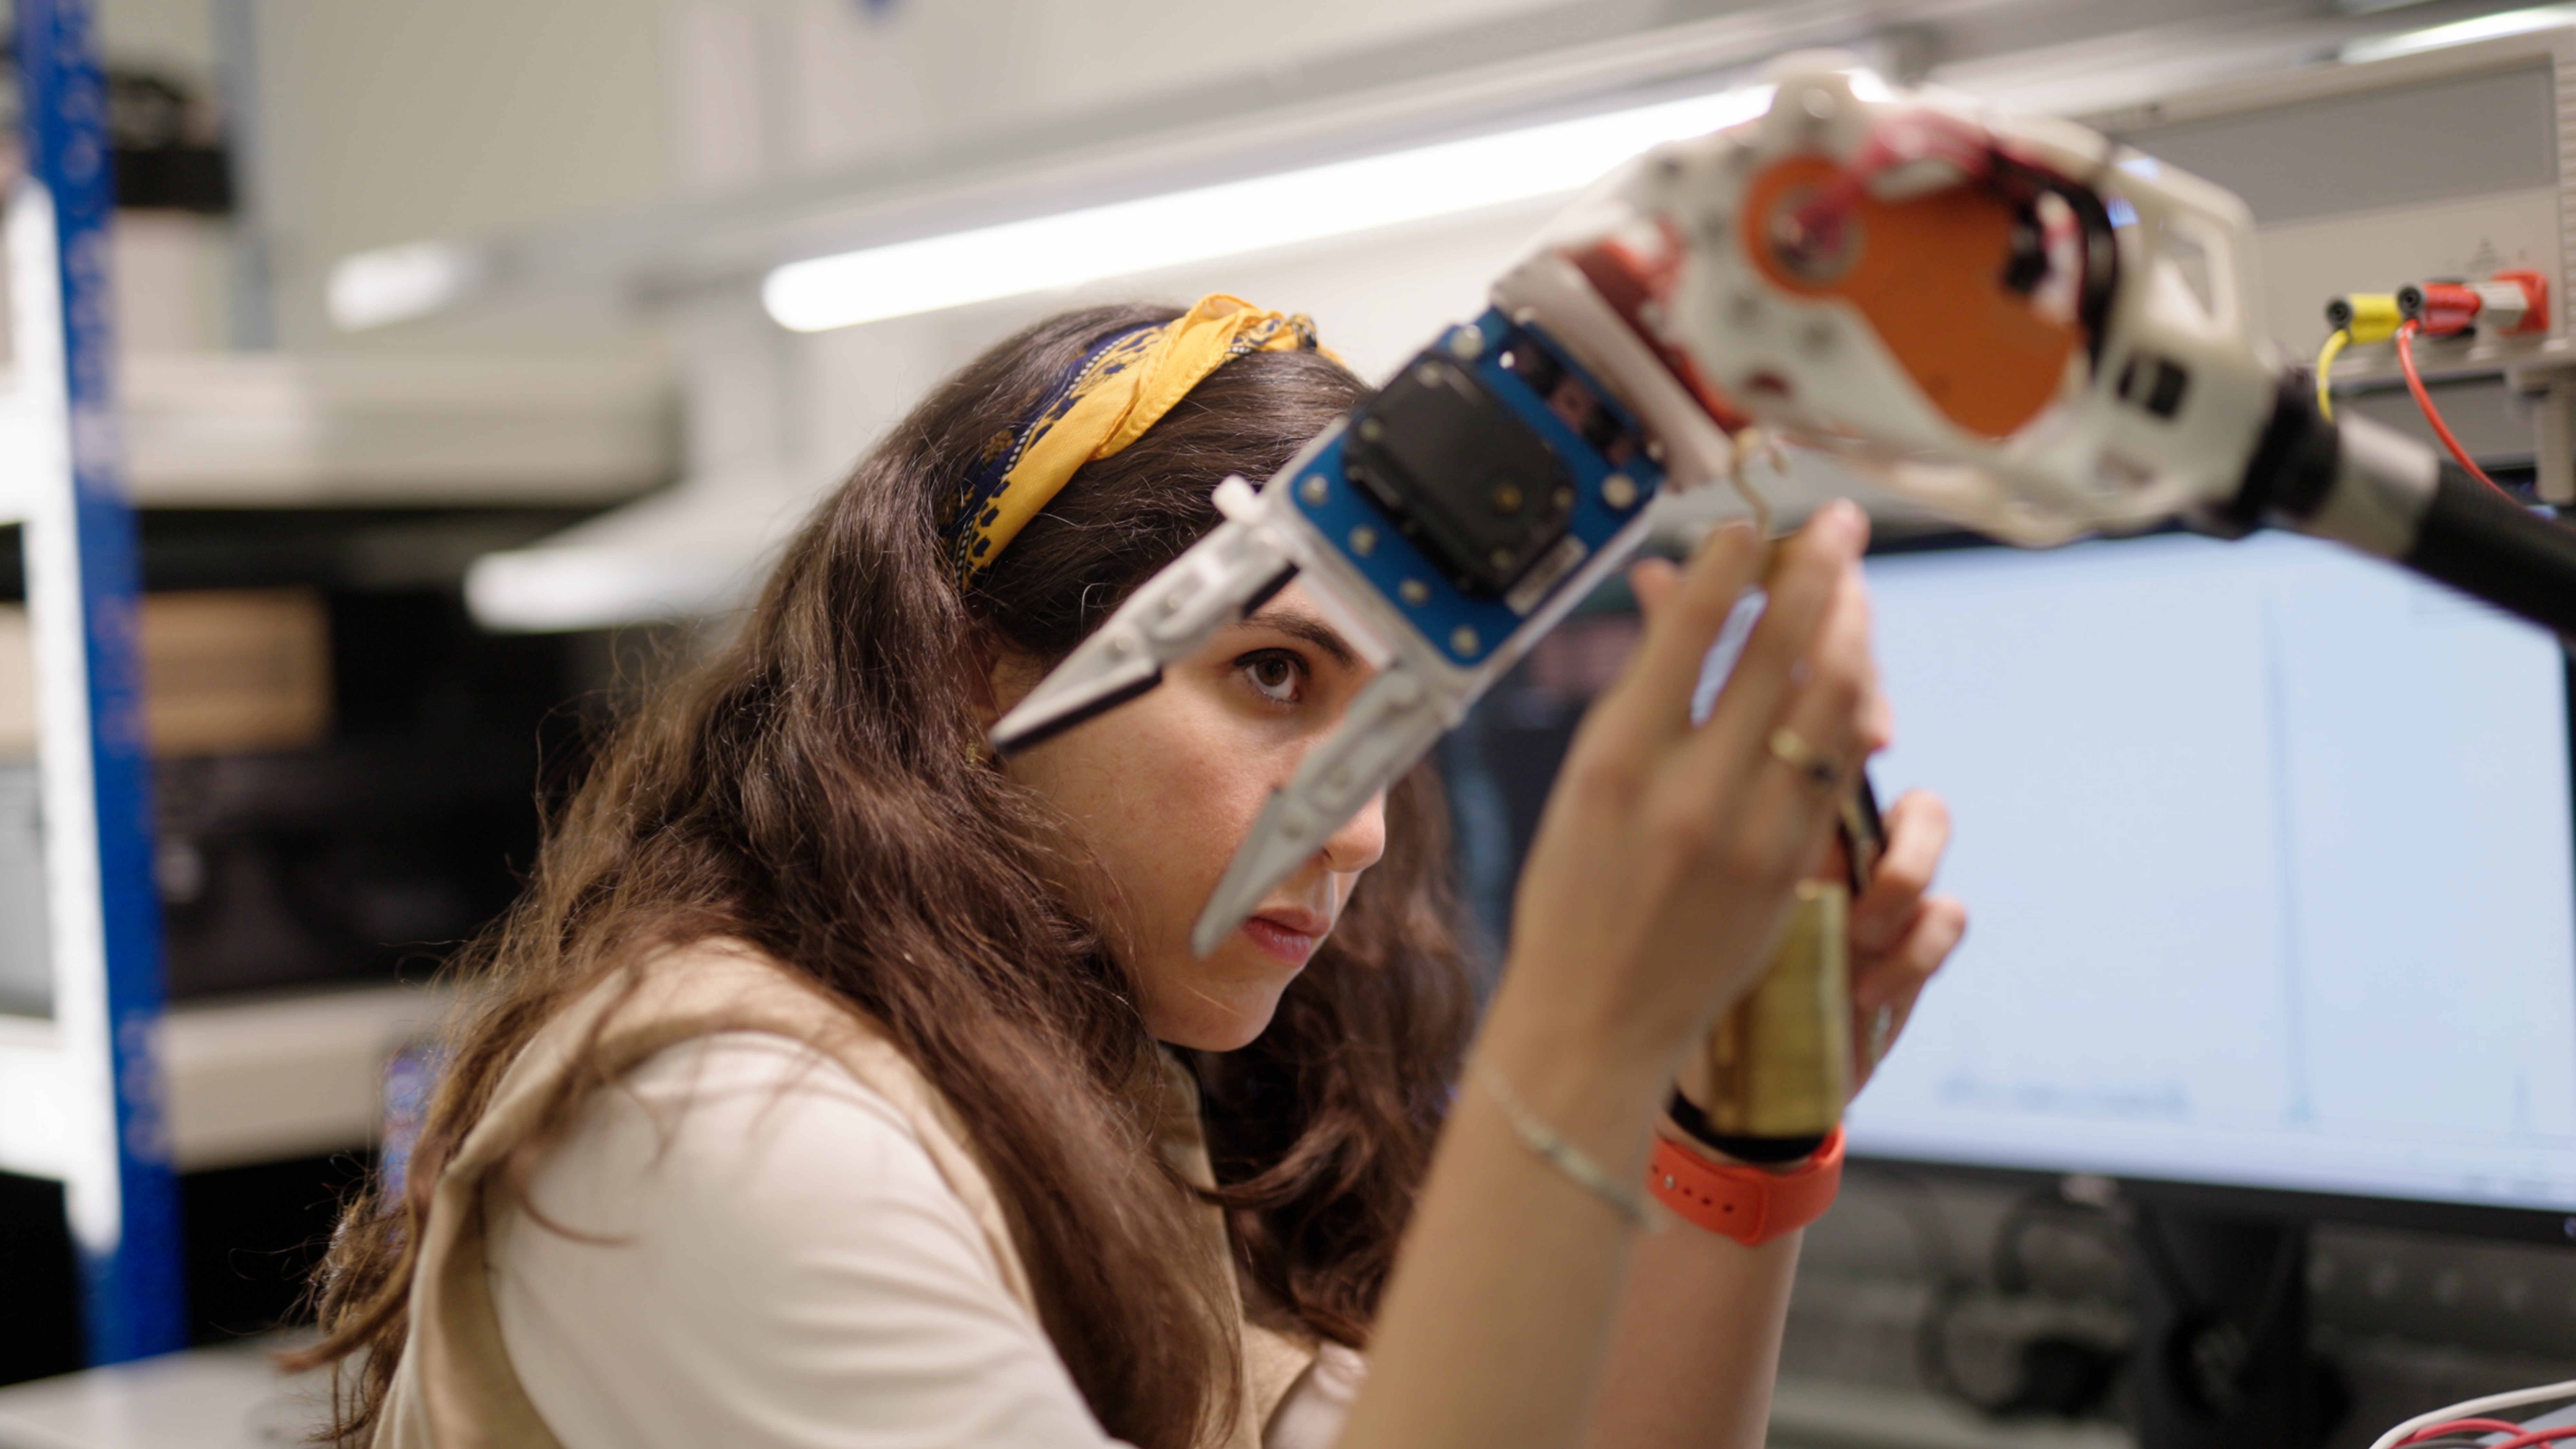 foto Dyson dezvaluie noi informatii prototipuri de roboti uz casnic